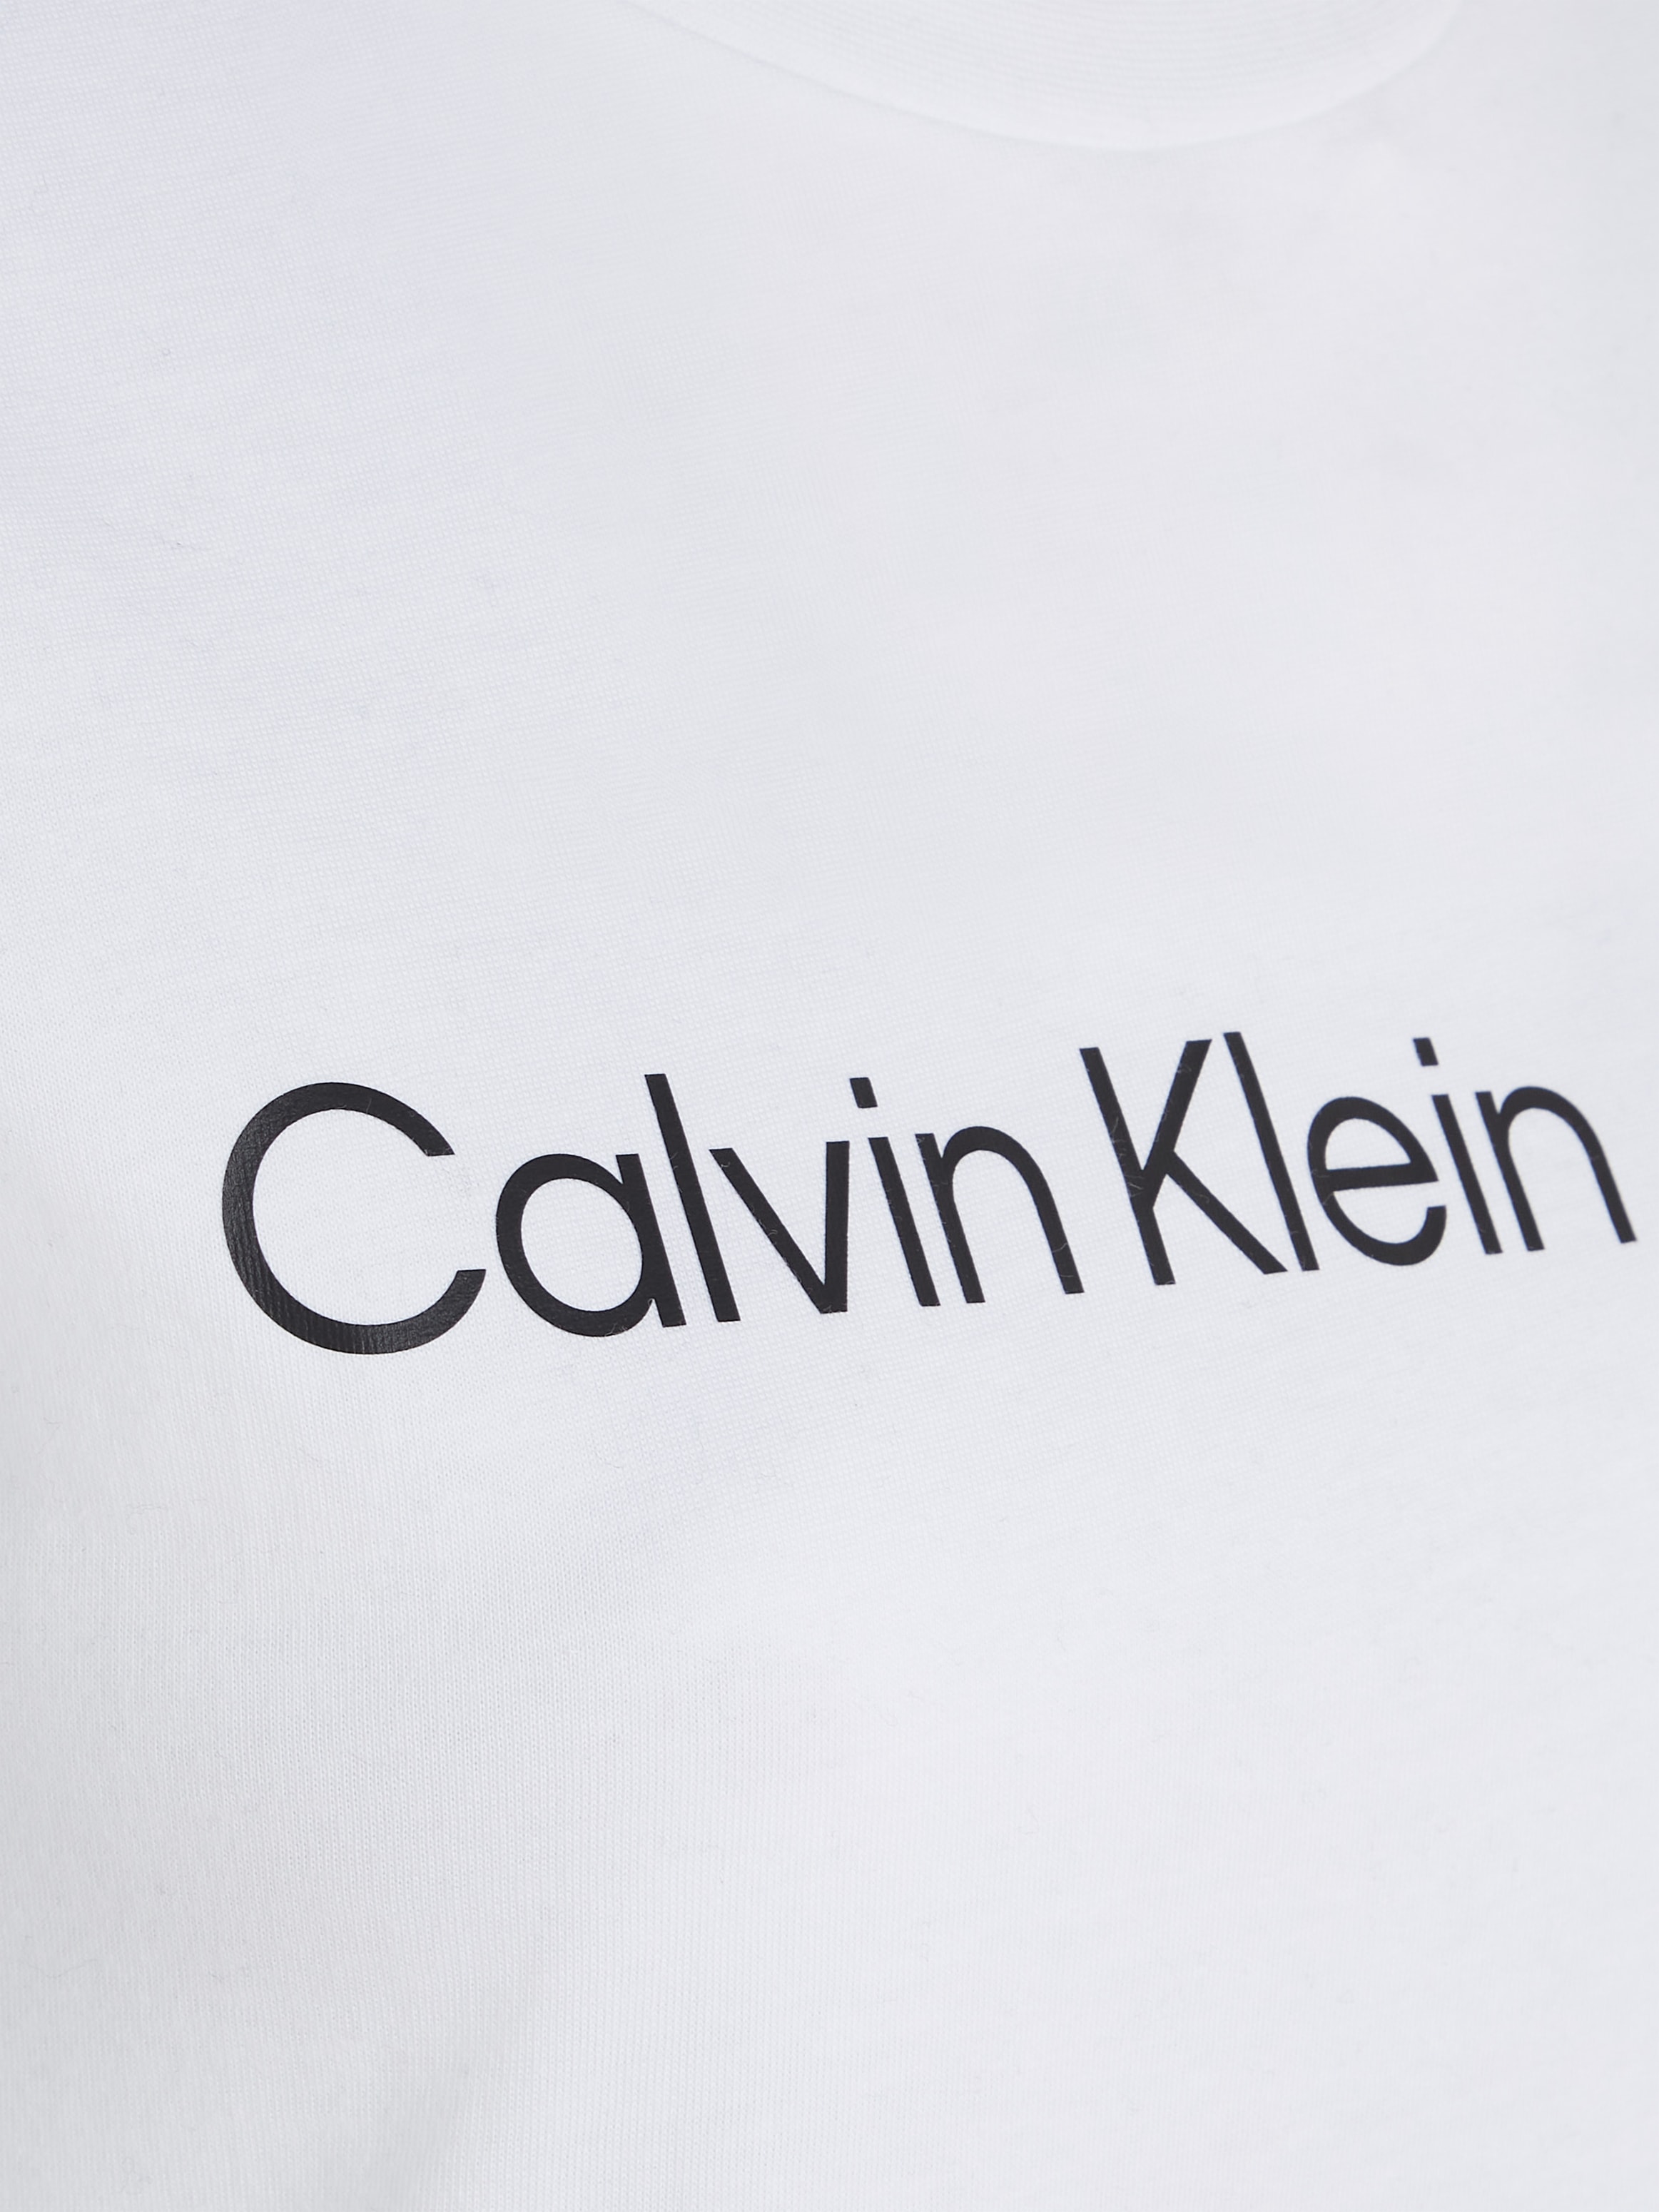 Calvin Klein Jeans T-Shirt »CORE INSTIT LOGO SLIM FIT TEE«, mit CK- Logoschriftzug online | I'm walking